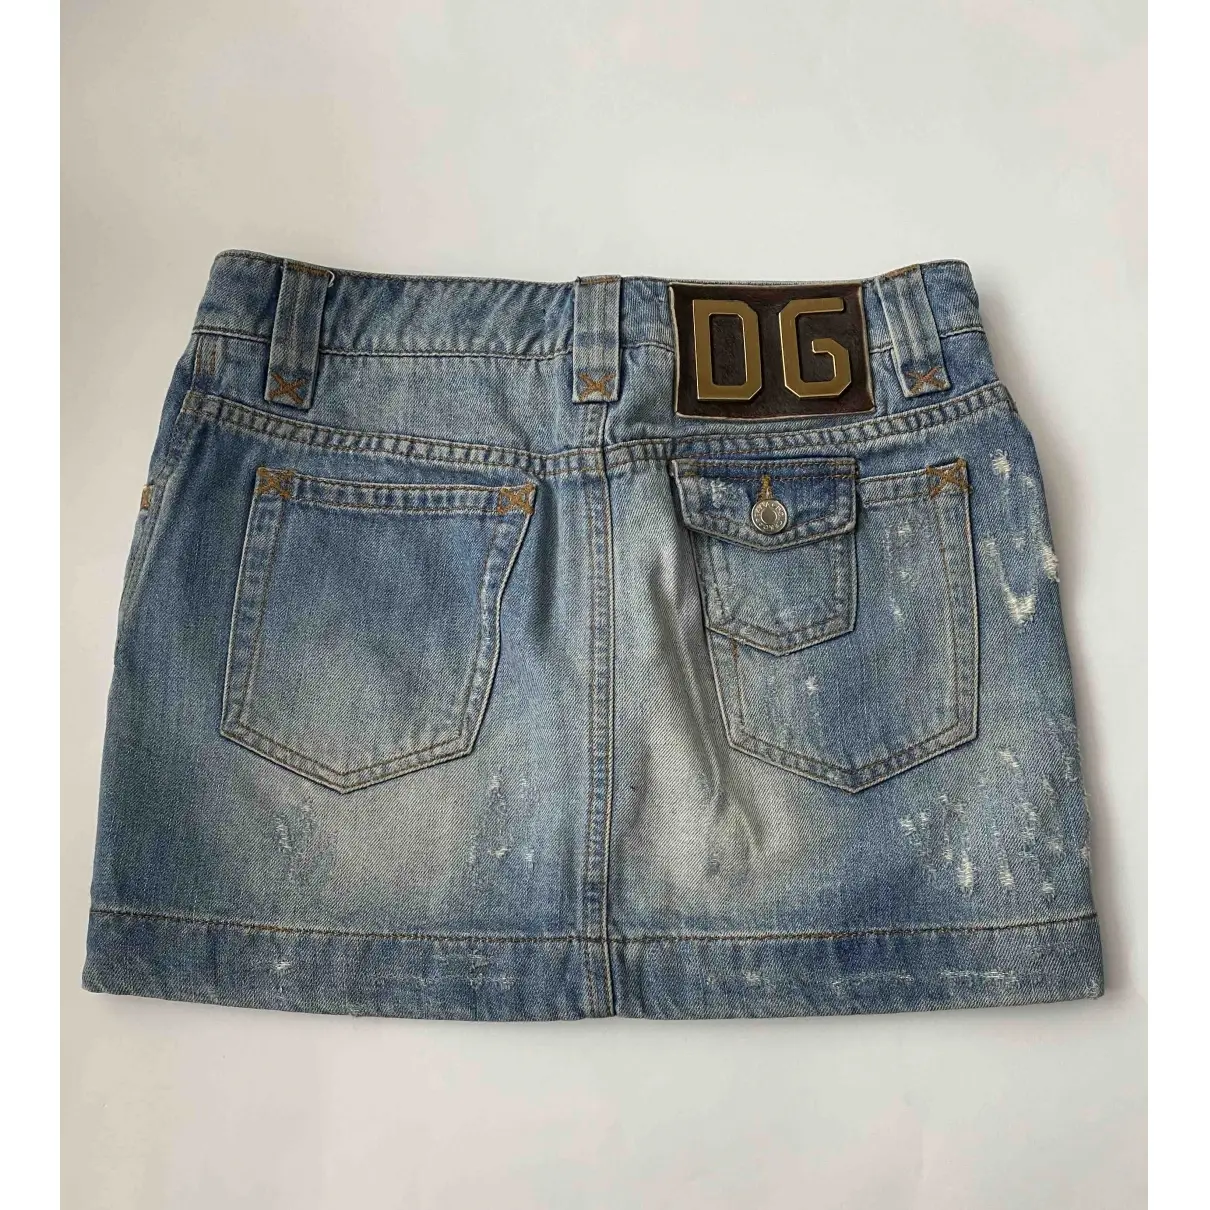 Dolce & Gabbana Mini skirt for sale - Vintage